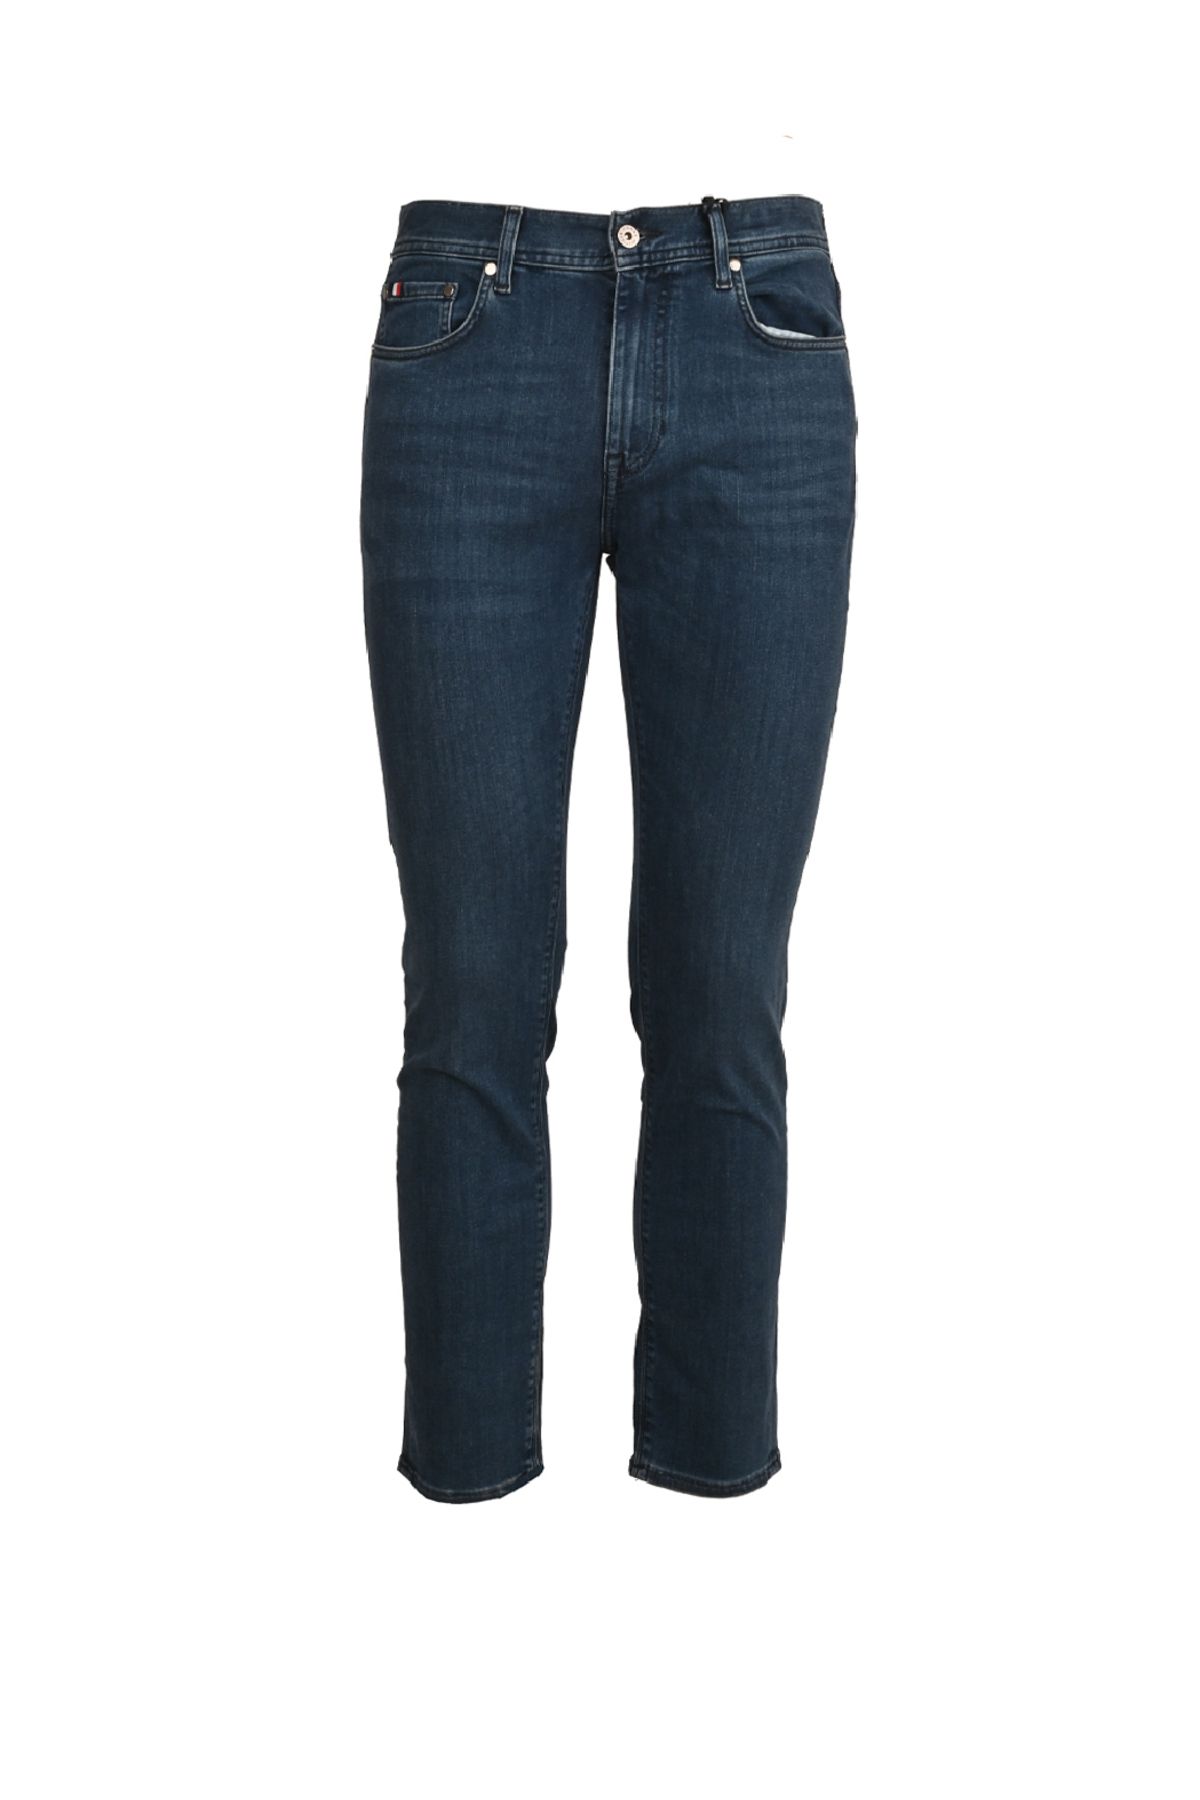 Tommy Hilfiger Erkek Denim Normal Belli Düz Model Günlük Kullanım Mavi1 Jeans MW0MW33980-1BE